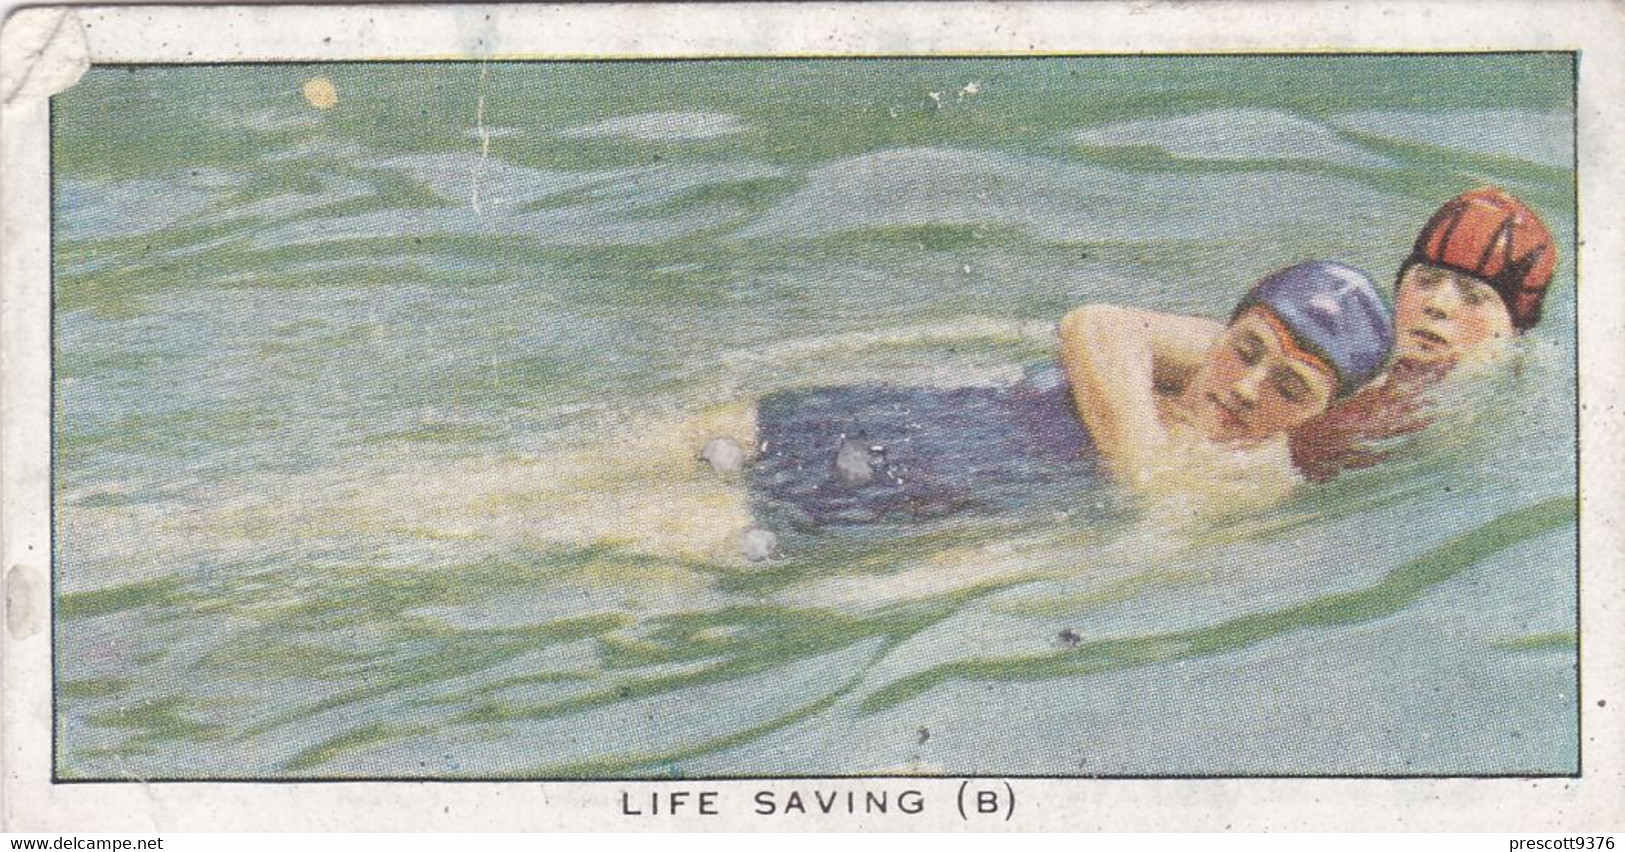 Swimming Diving & Life Saving - No25 -  1937 - Ardath Cigarette Card - Original - Sport - Phillips / BDV